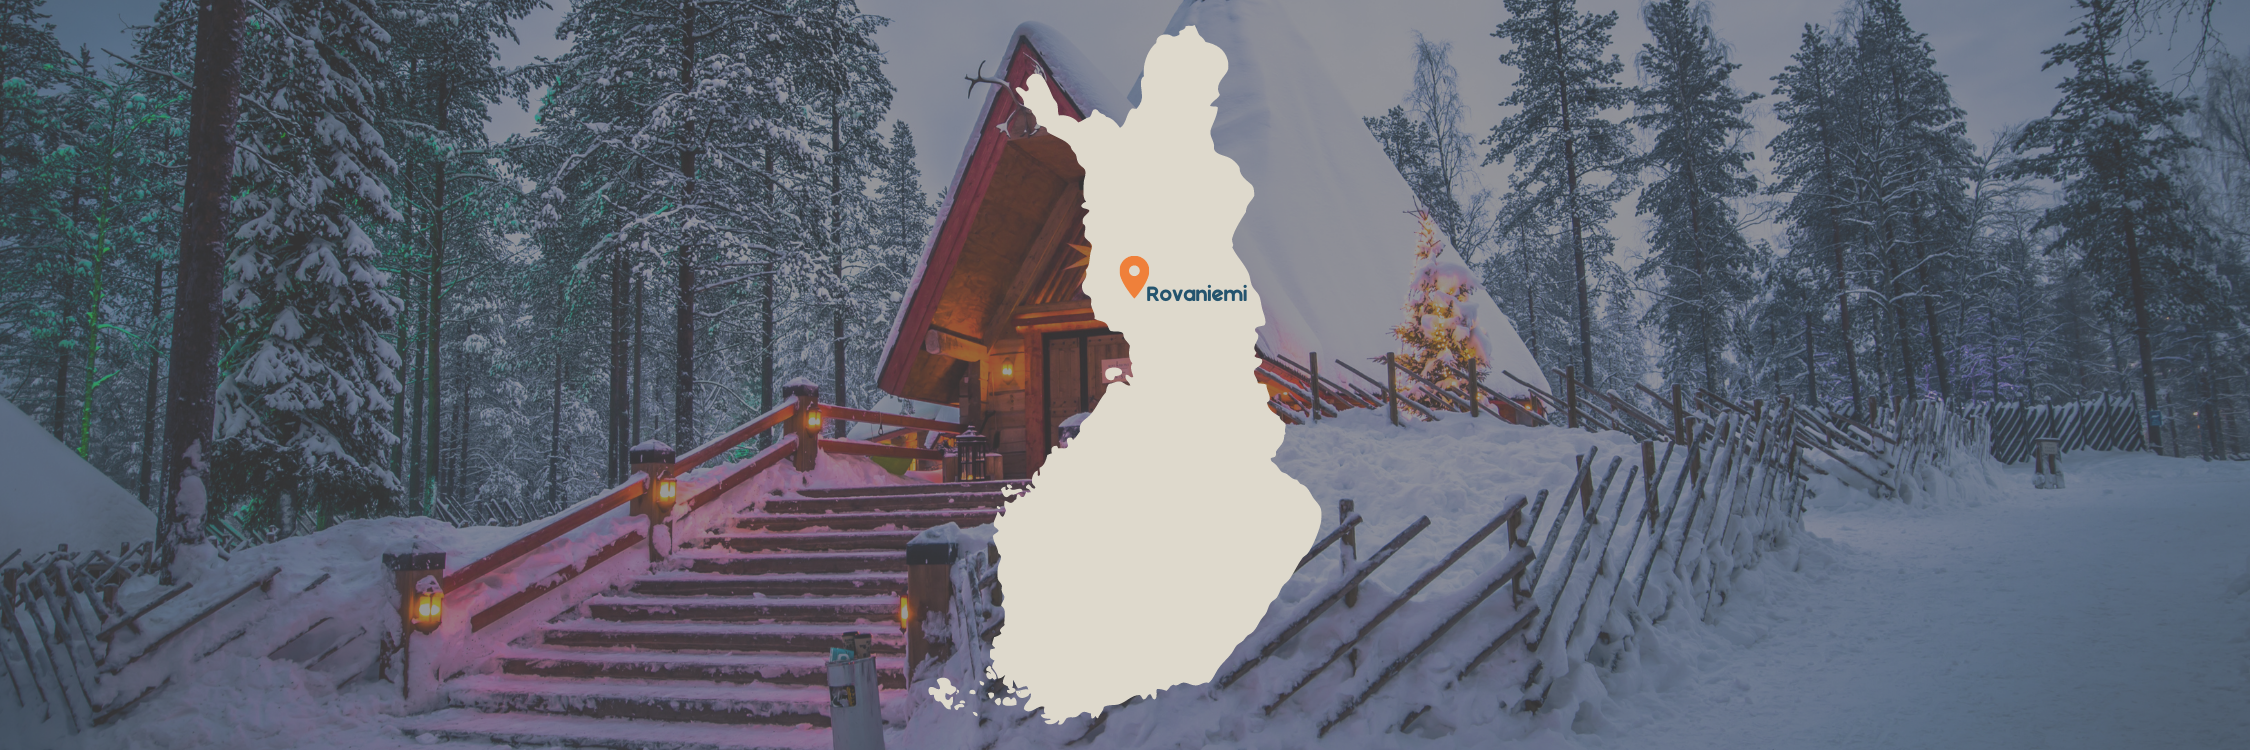 Reisroute kaartje Fins-Lapland